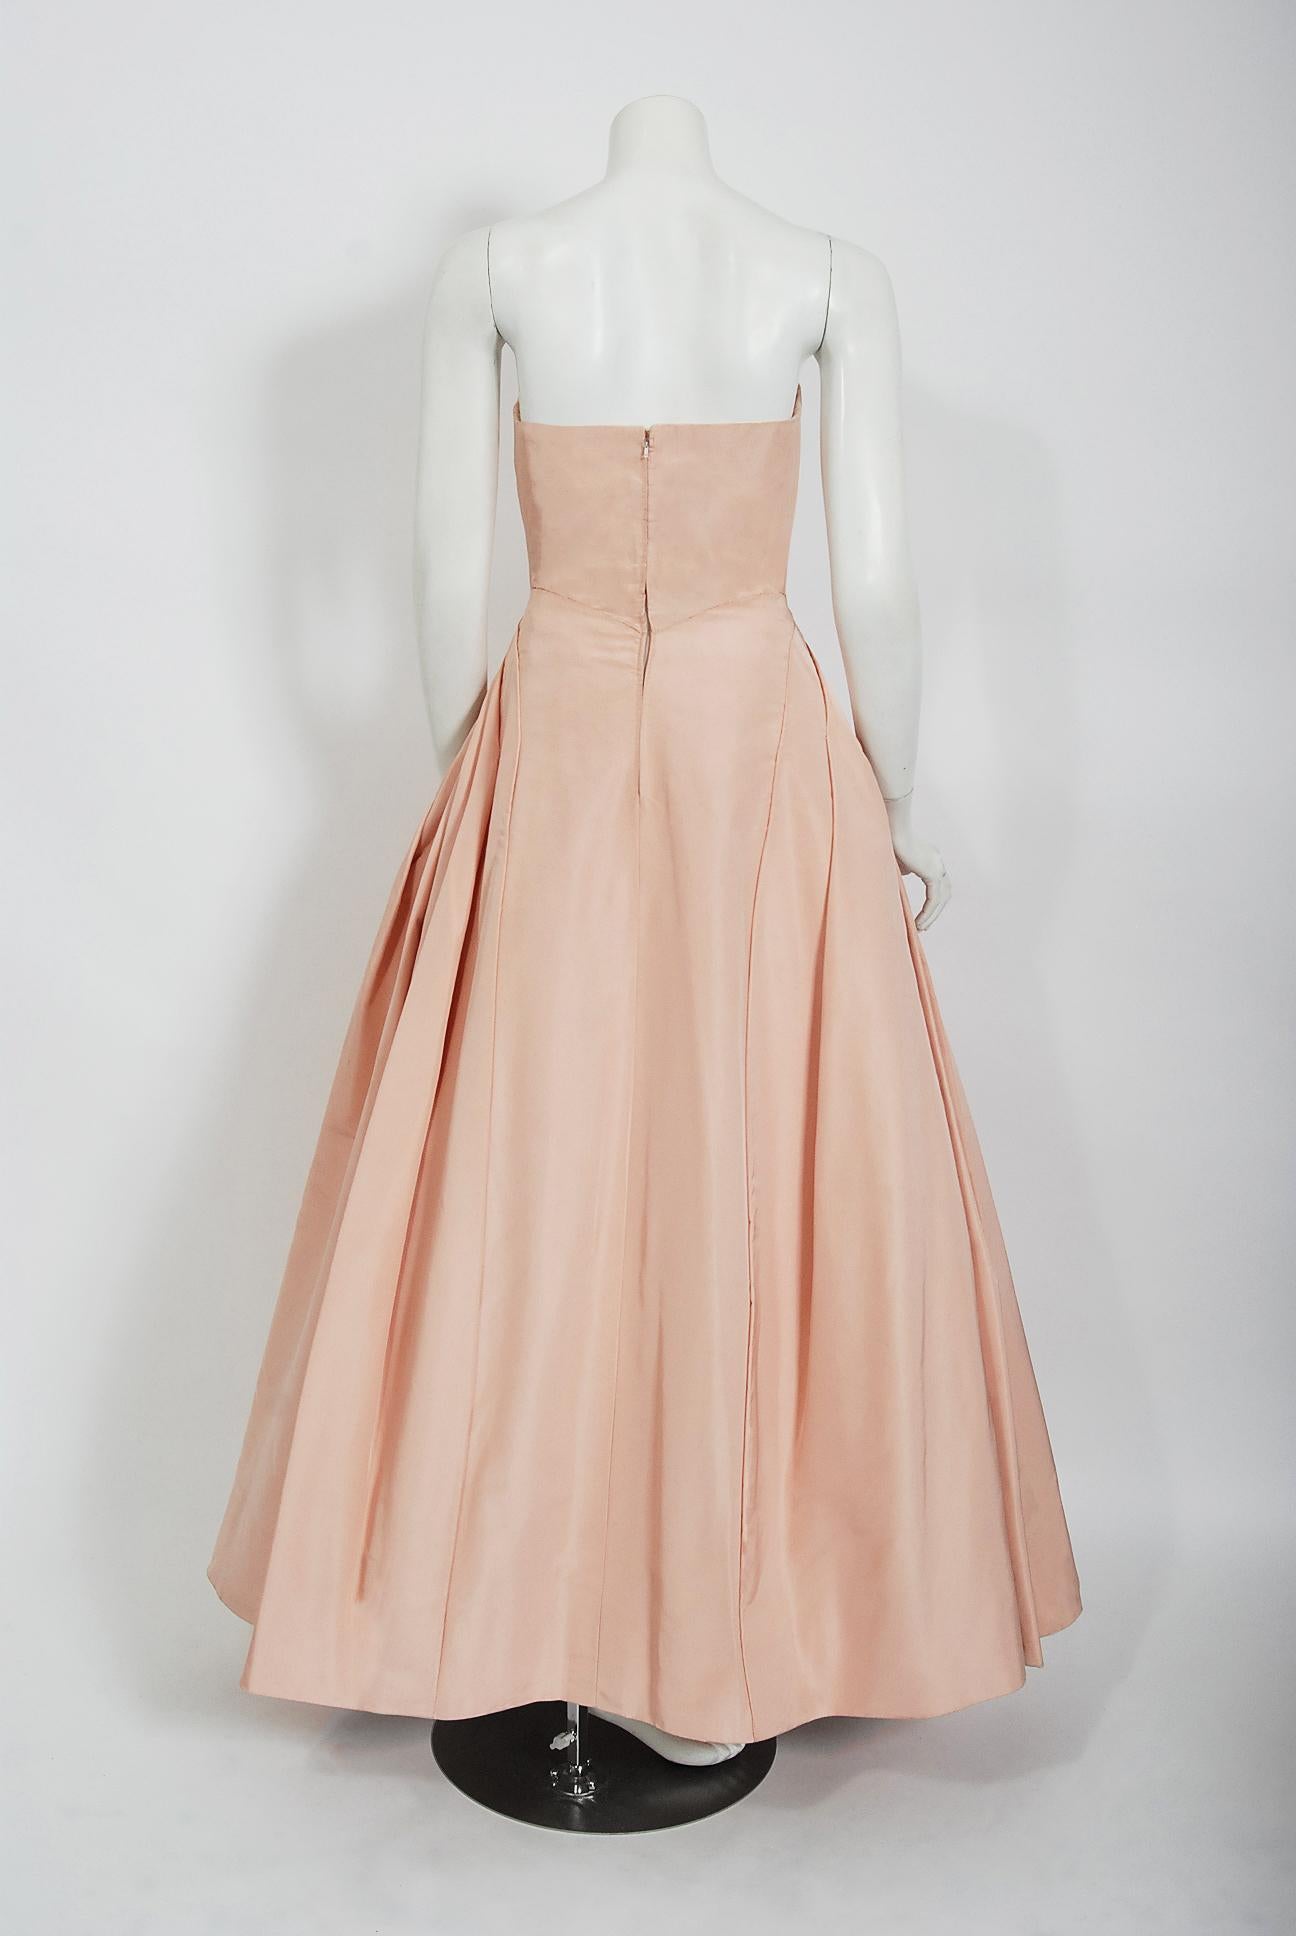 Vintage 1950's Mingolini Guggenheim Couture Rosa plissiert Seide trägerlos Kleid 1